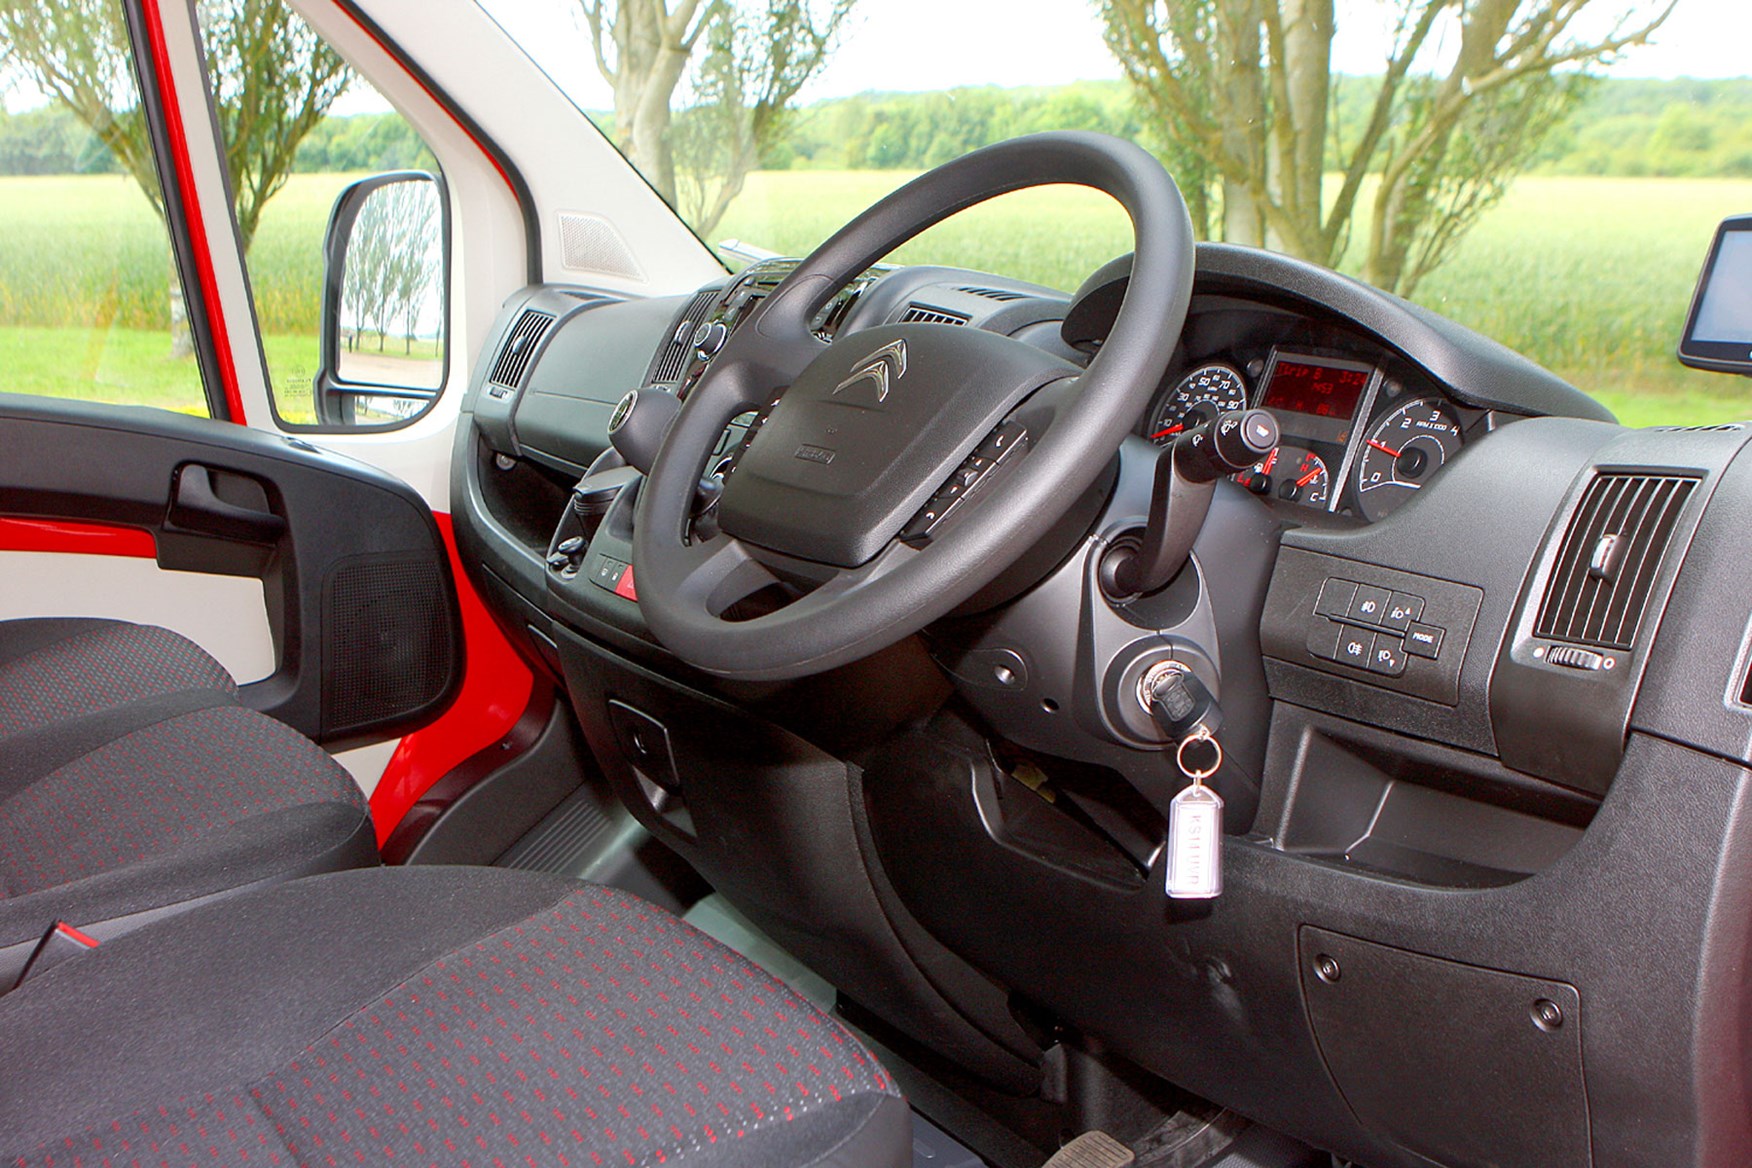 Citroen Relay 2.2 HDi 130 review - cab interior